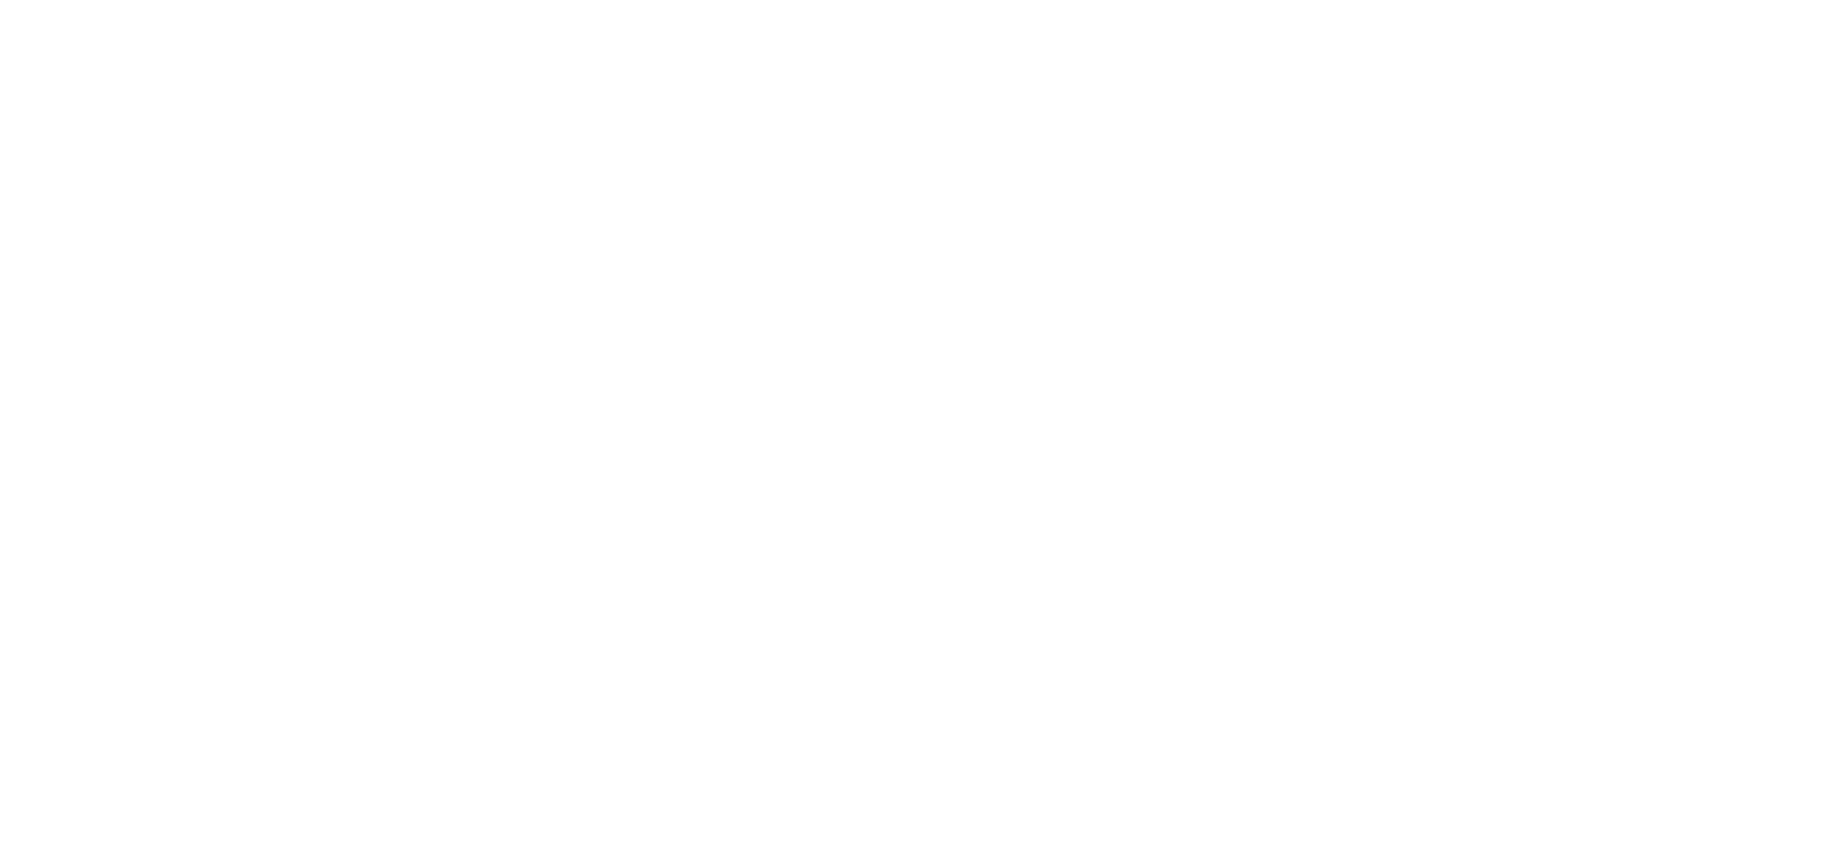 KMF Group